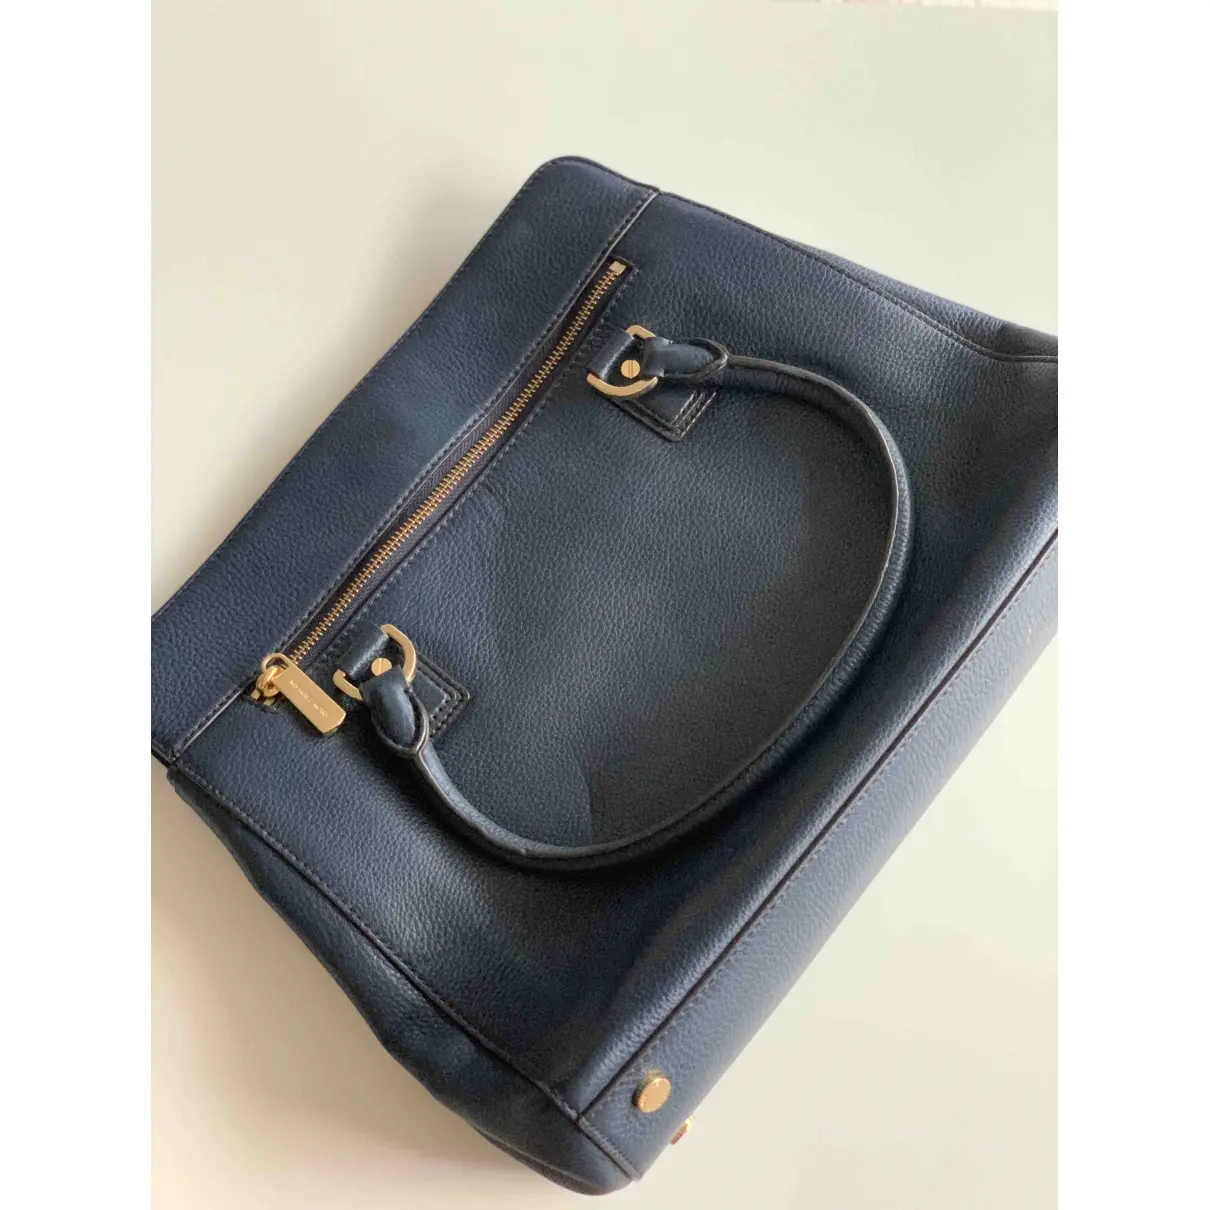 Buy Michael Kors Astrid leather handbag online